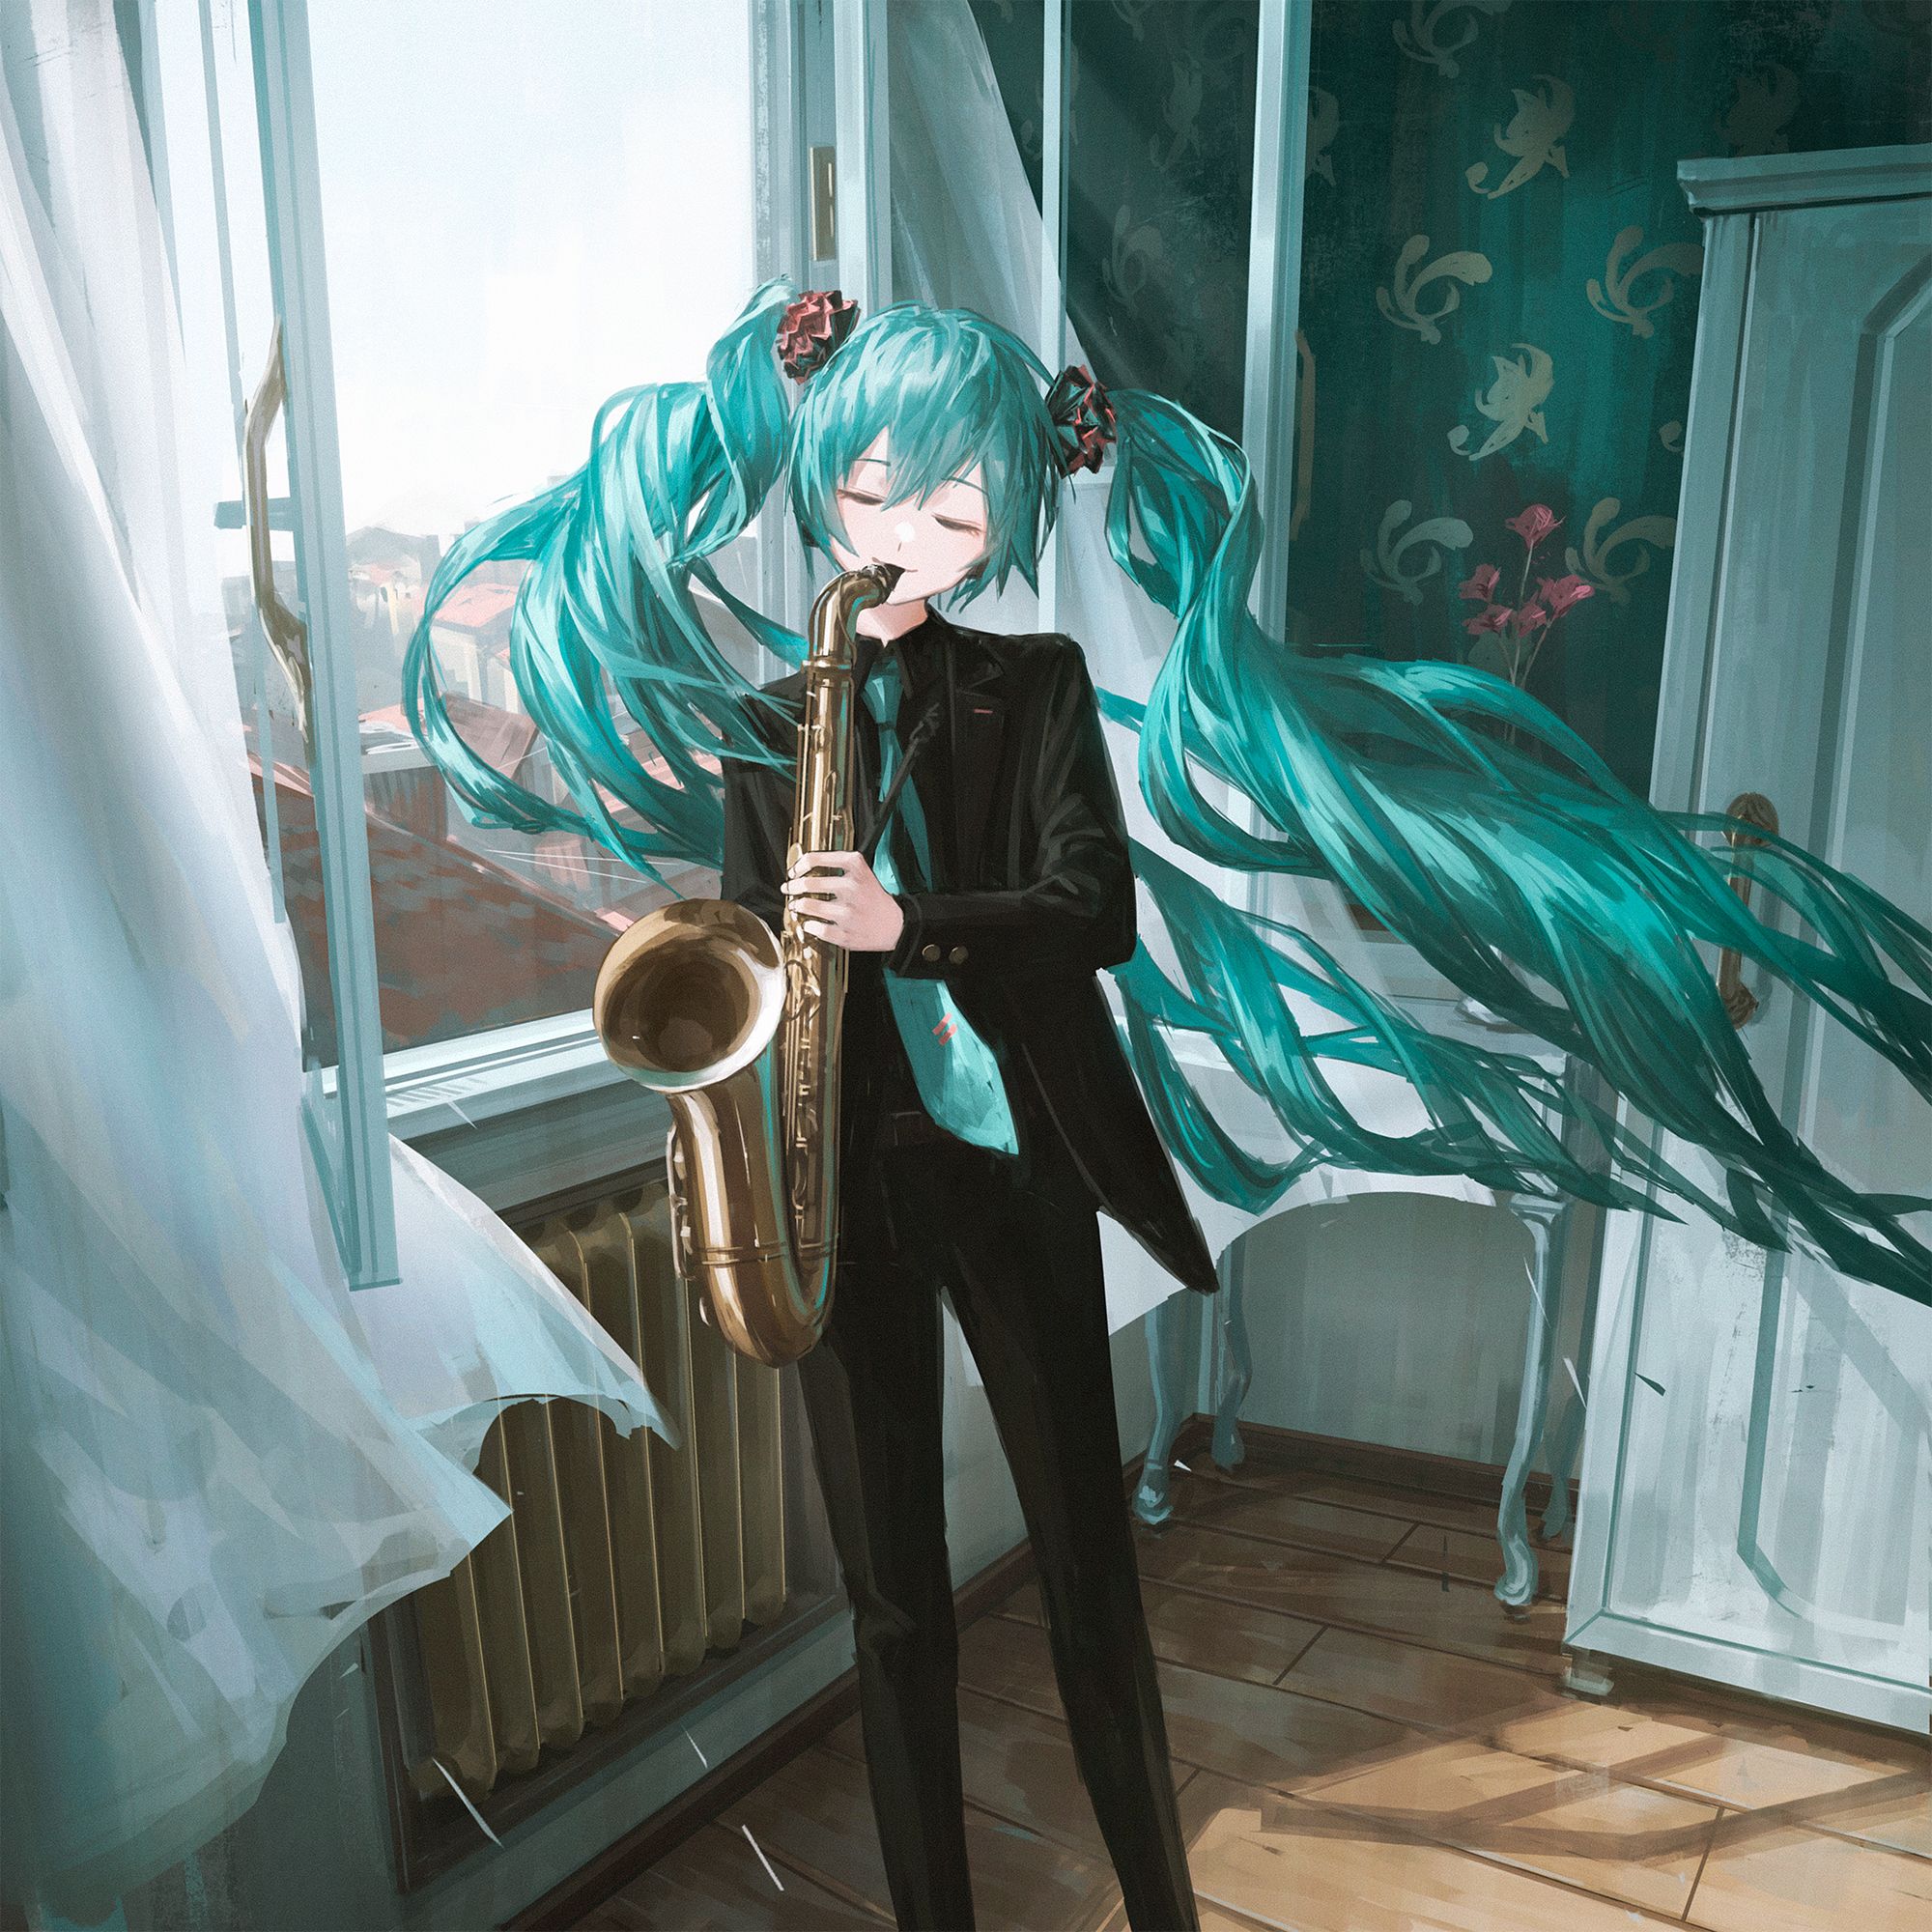 Anime 2000x2000 anime anime girls Hatsune Miku Vocaloid Reoen artwork cyan hair twintails saxophones suits